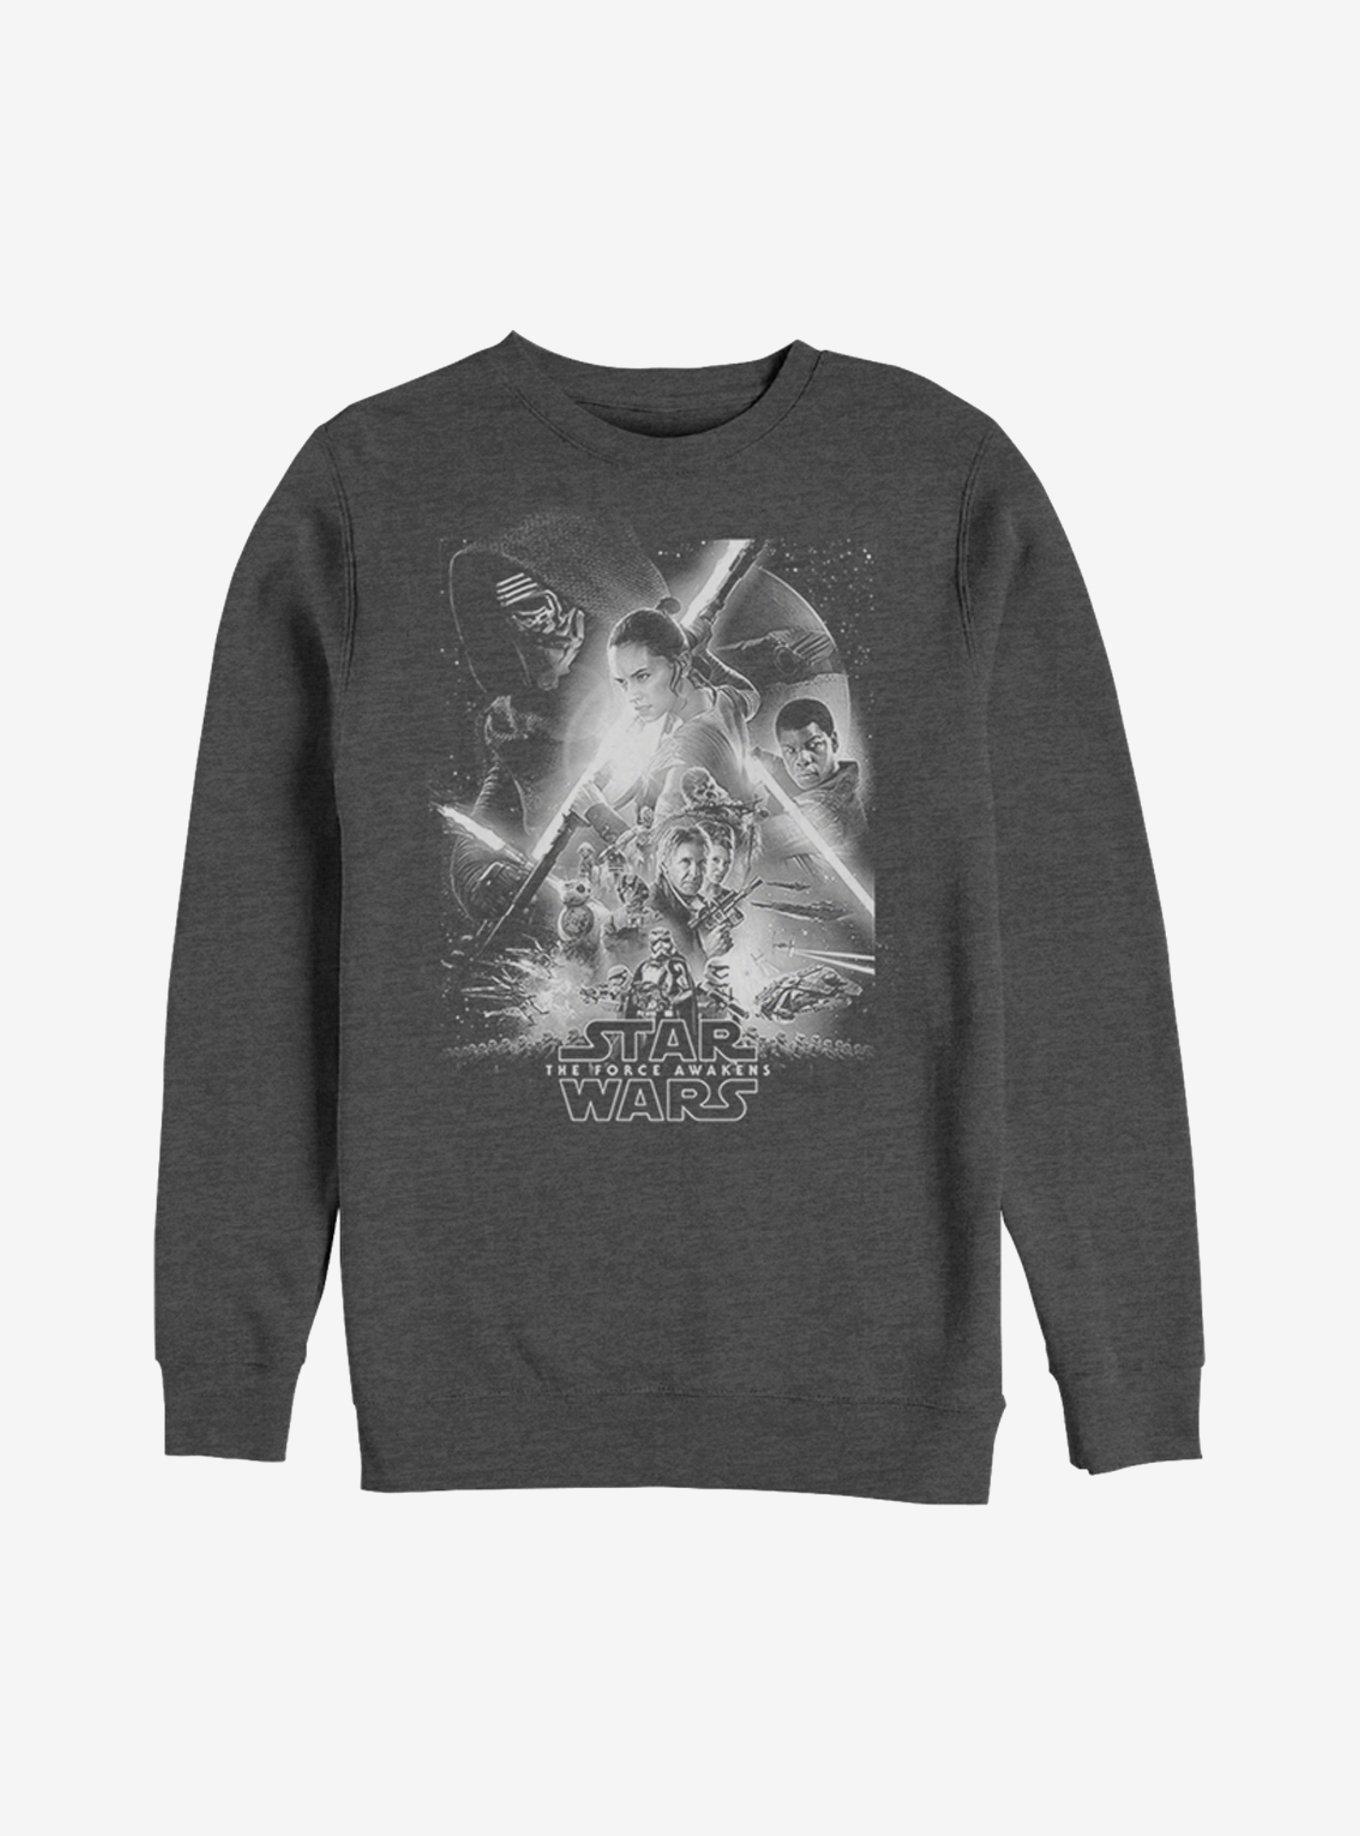 Star Wars Episode VII The Force Awakens Grey-Scale Poster Sweatshirt, CHAR HTR, hi-res